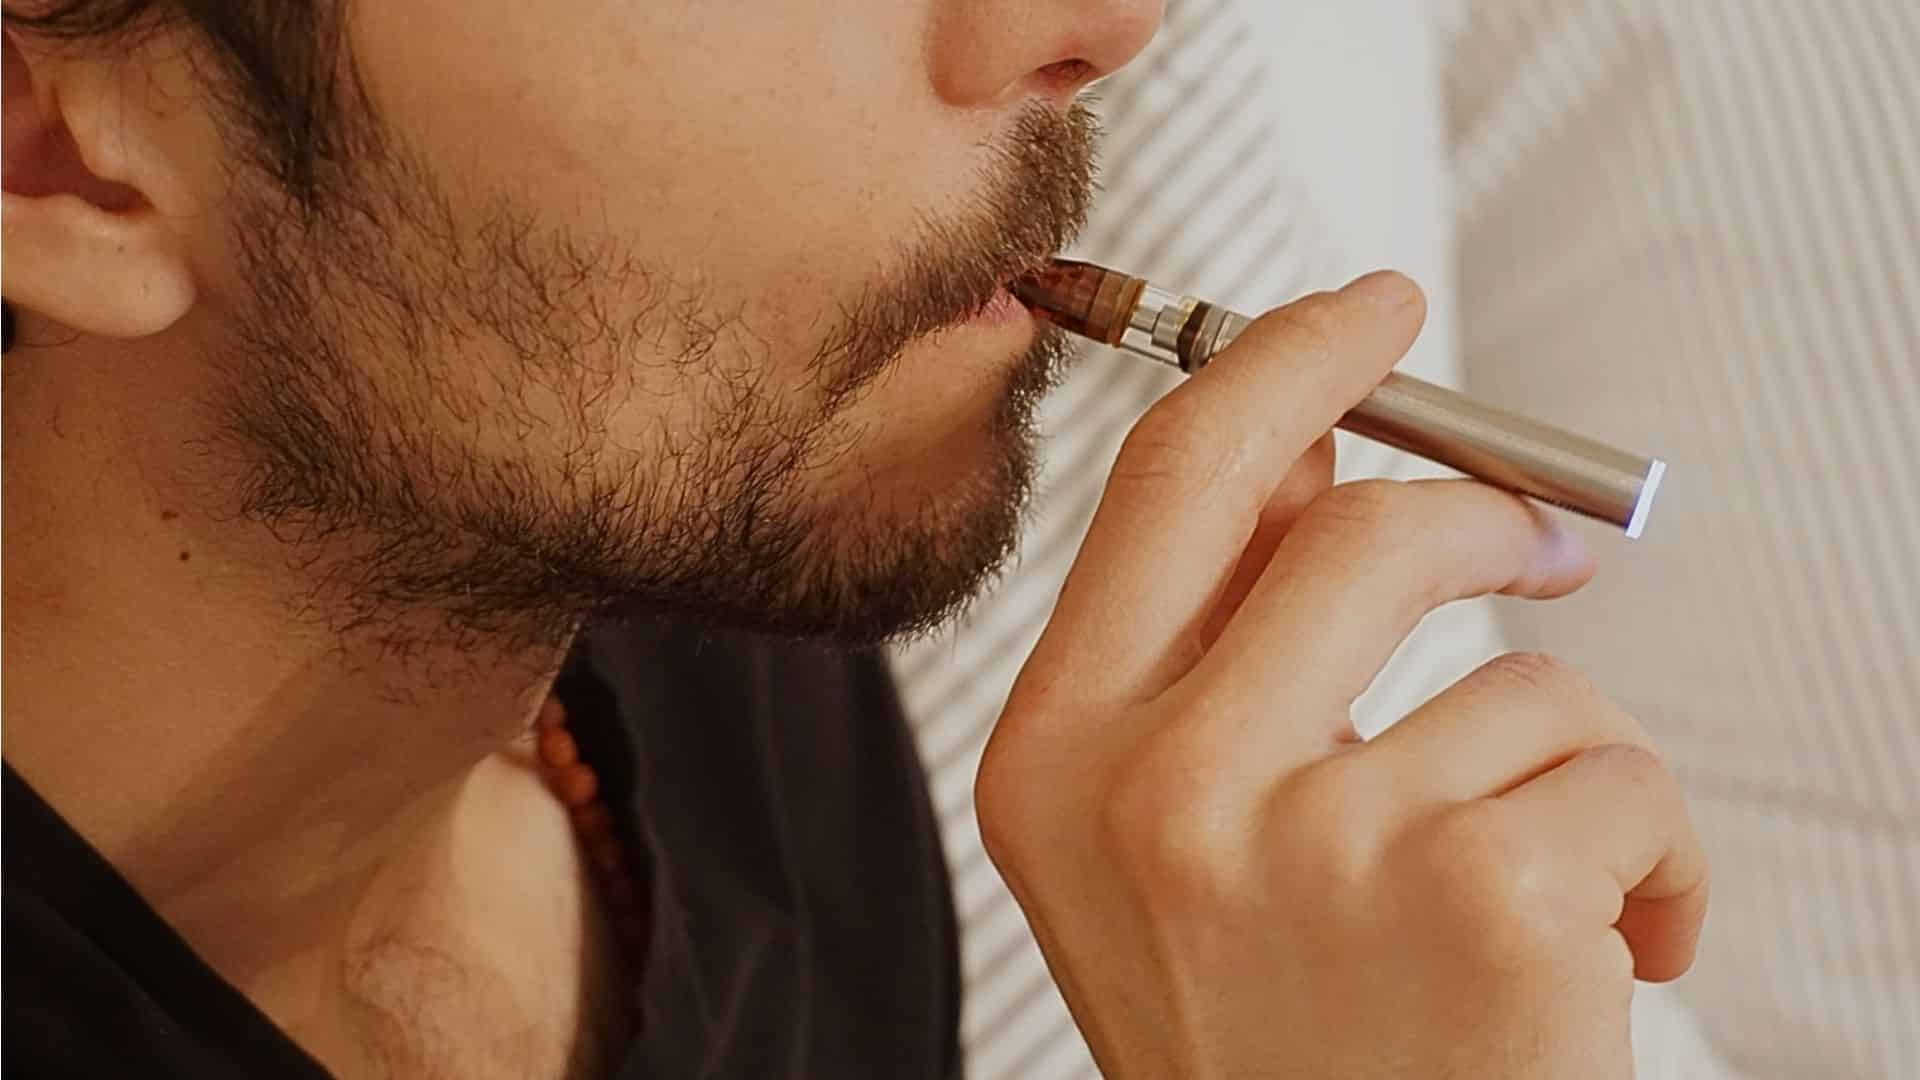 A close-up shot of a man smoking a vape (e-cigarette).